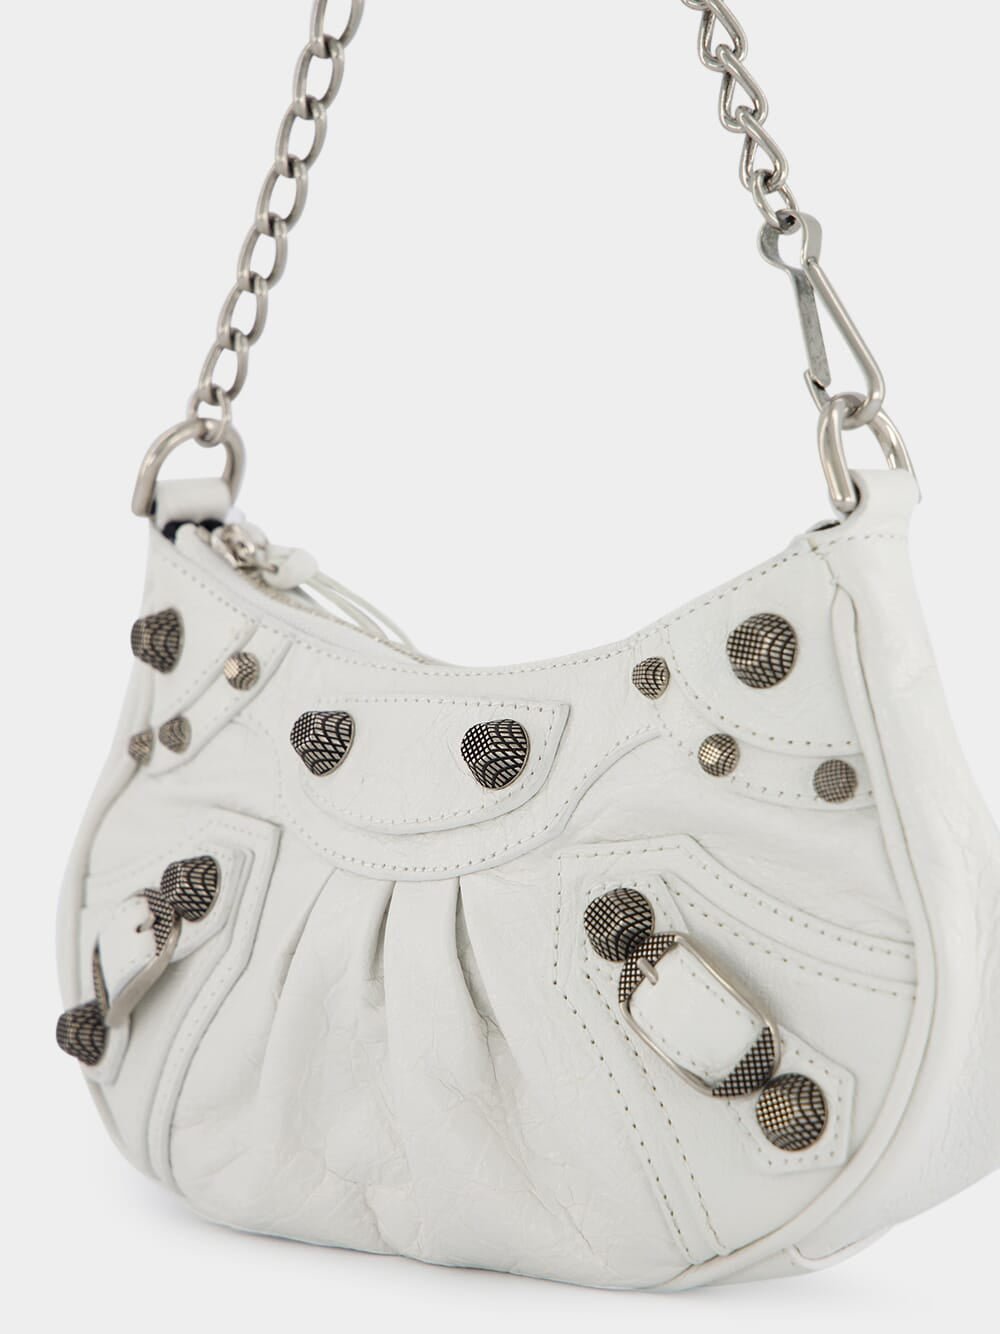 BalenciagaLe Cagole Mini Bag With Chain at Fashion Clinic